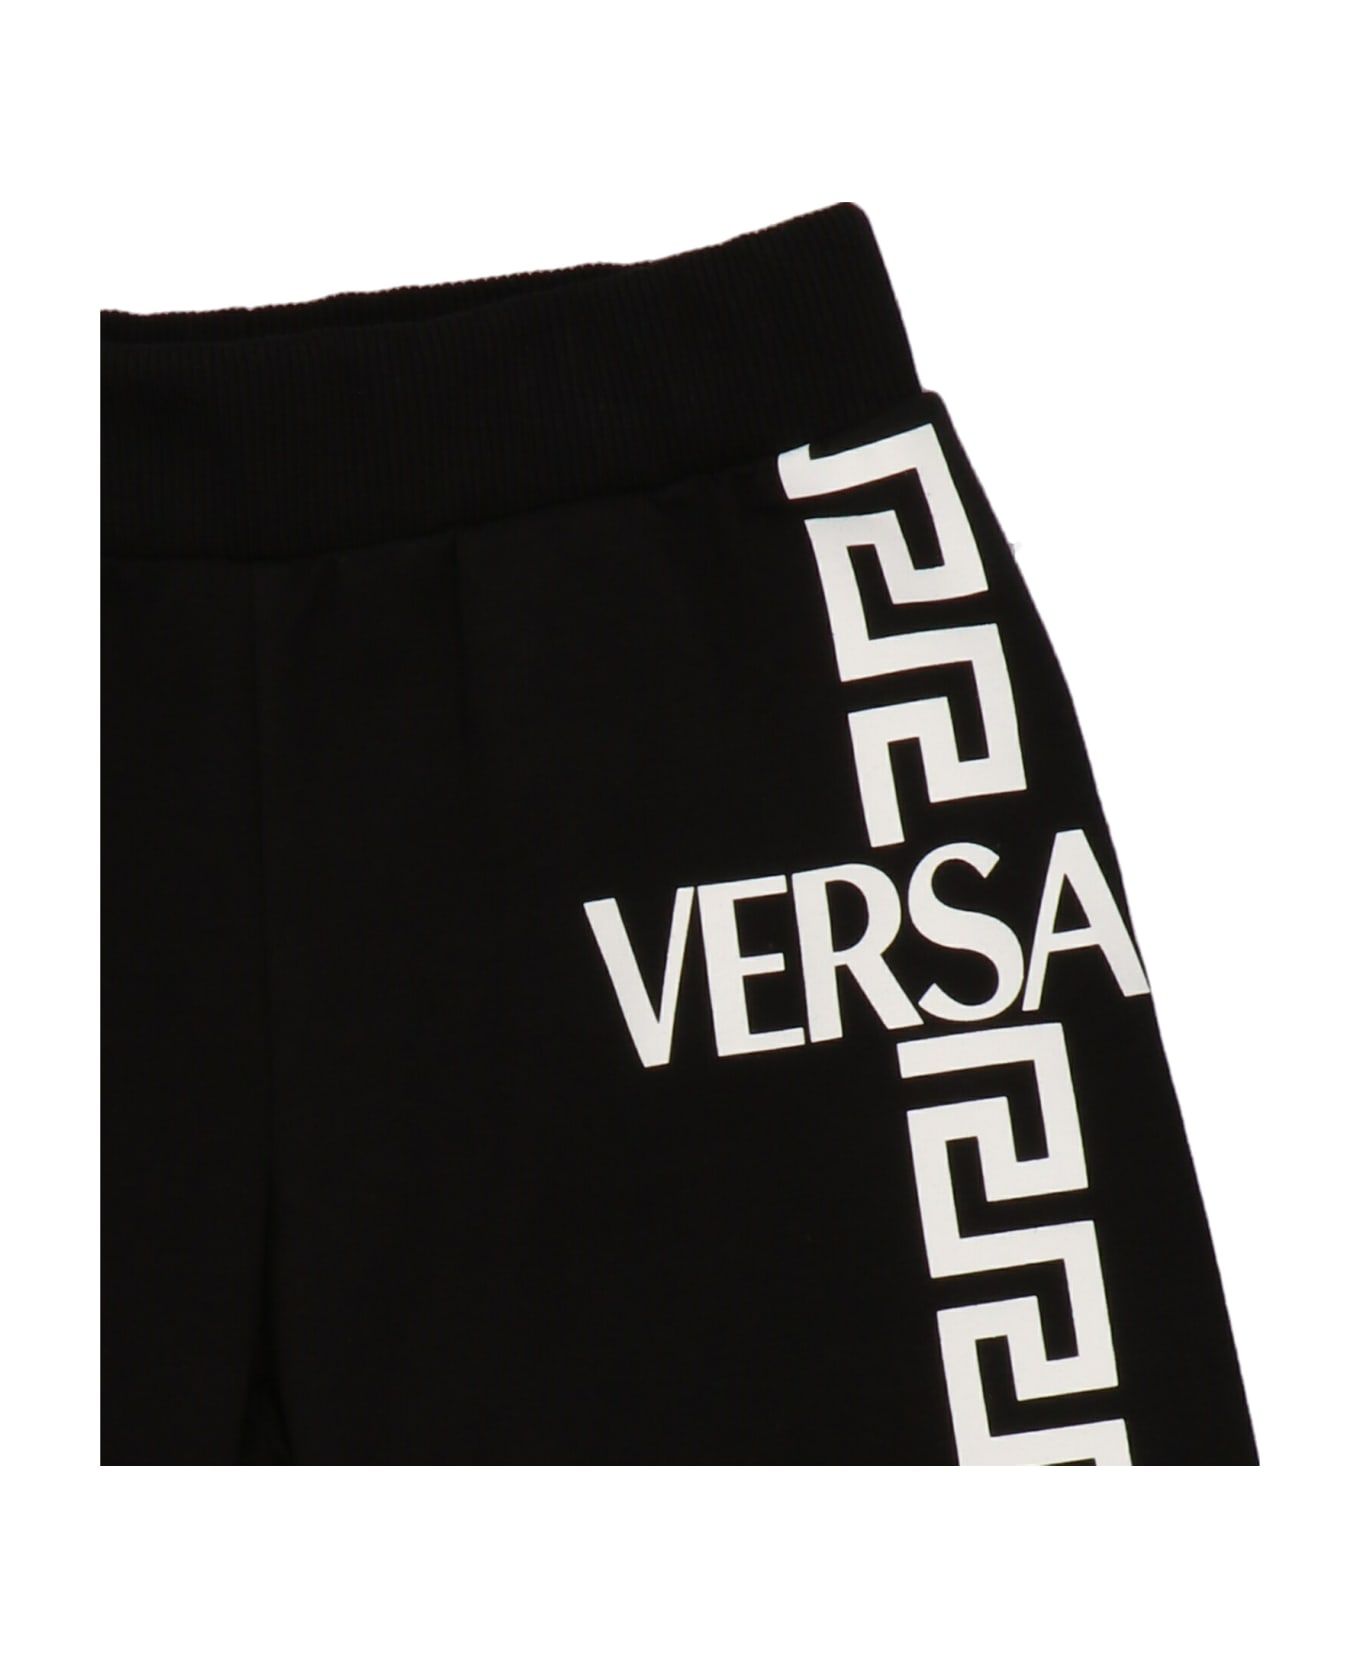 Versace 'greca' Bermuda Shorts - White/Black